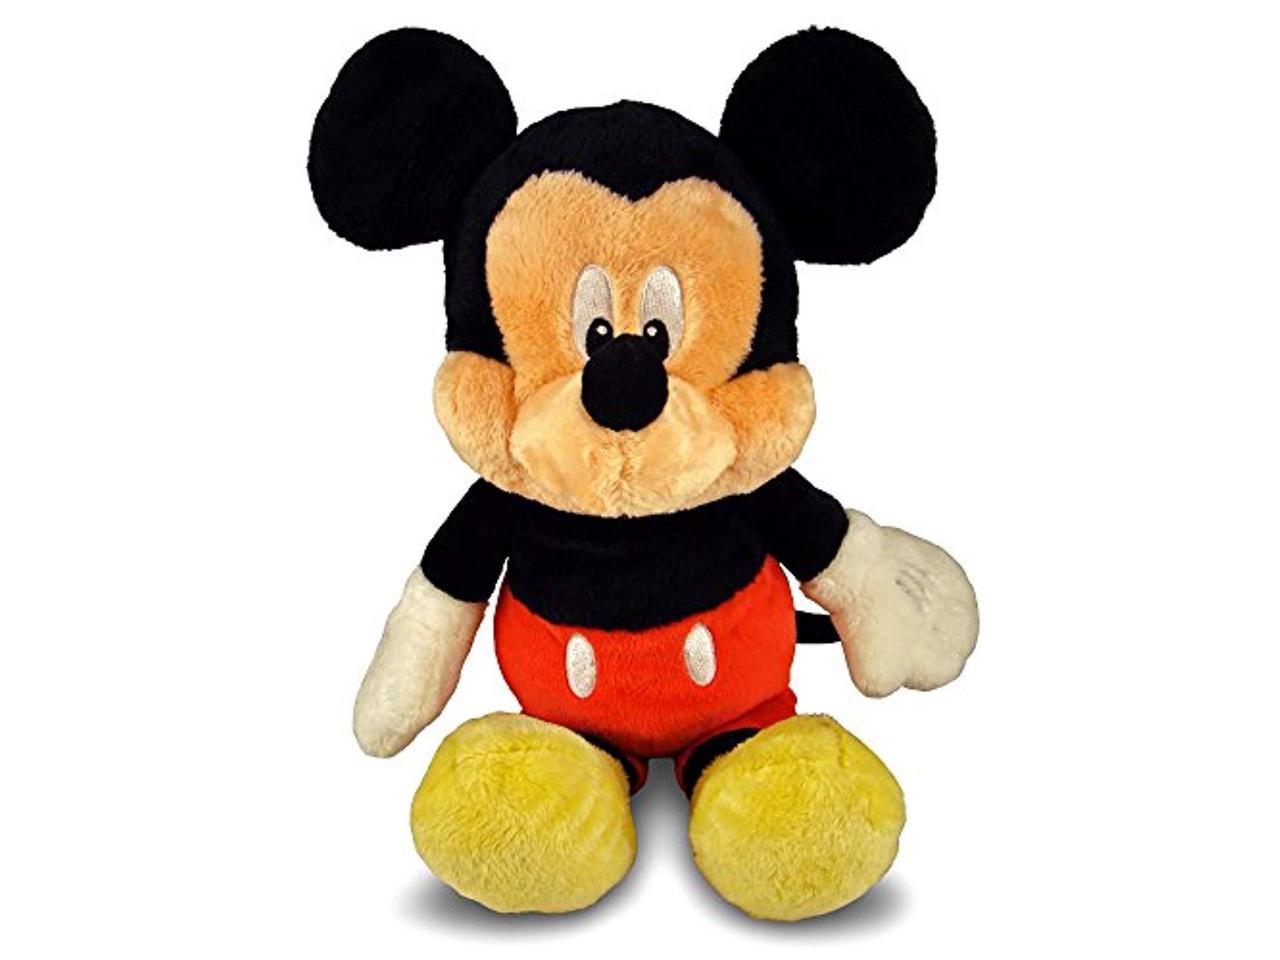 Red Disney Baby Mickey Mouse Plush Stuffed Animal Snuggler Blanket 